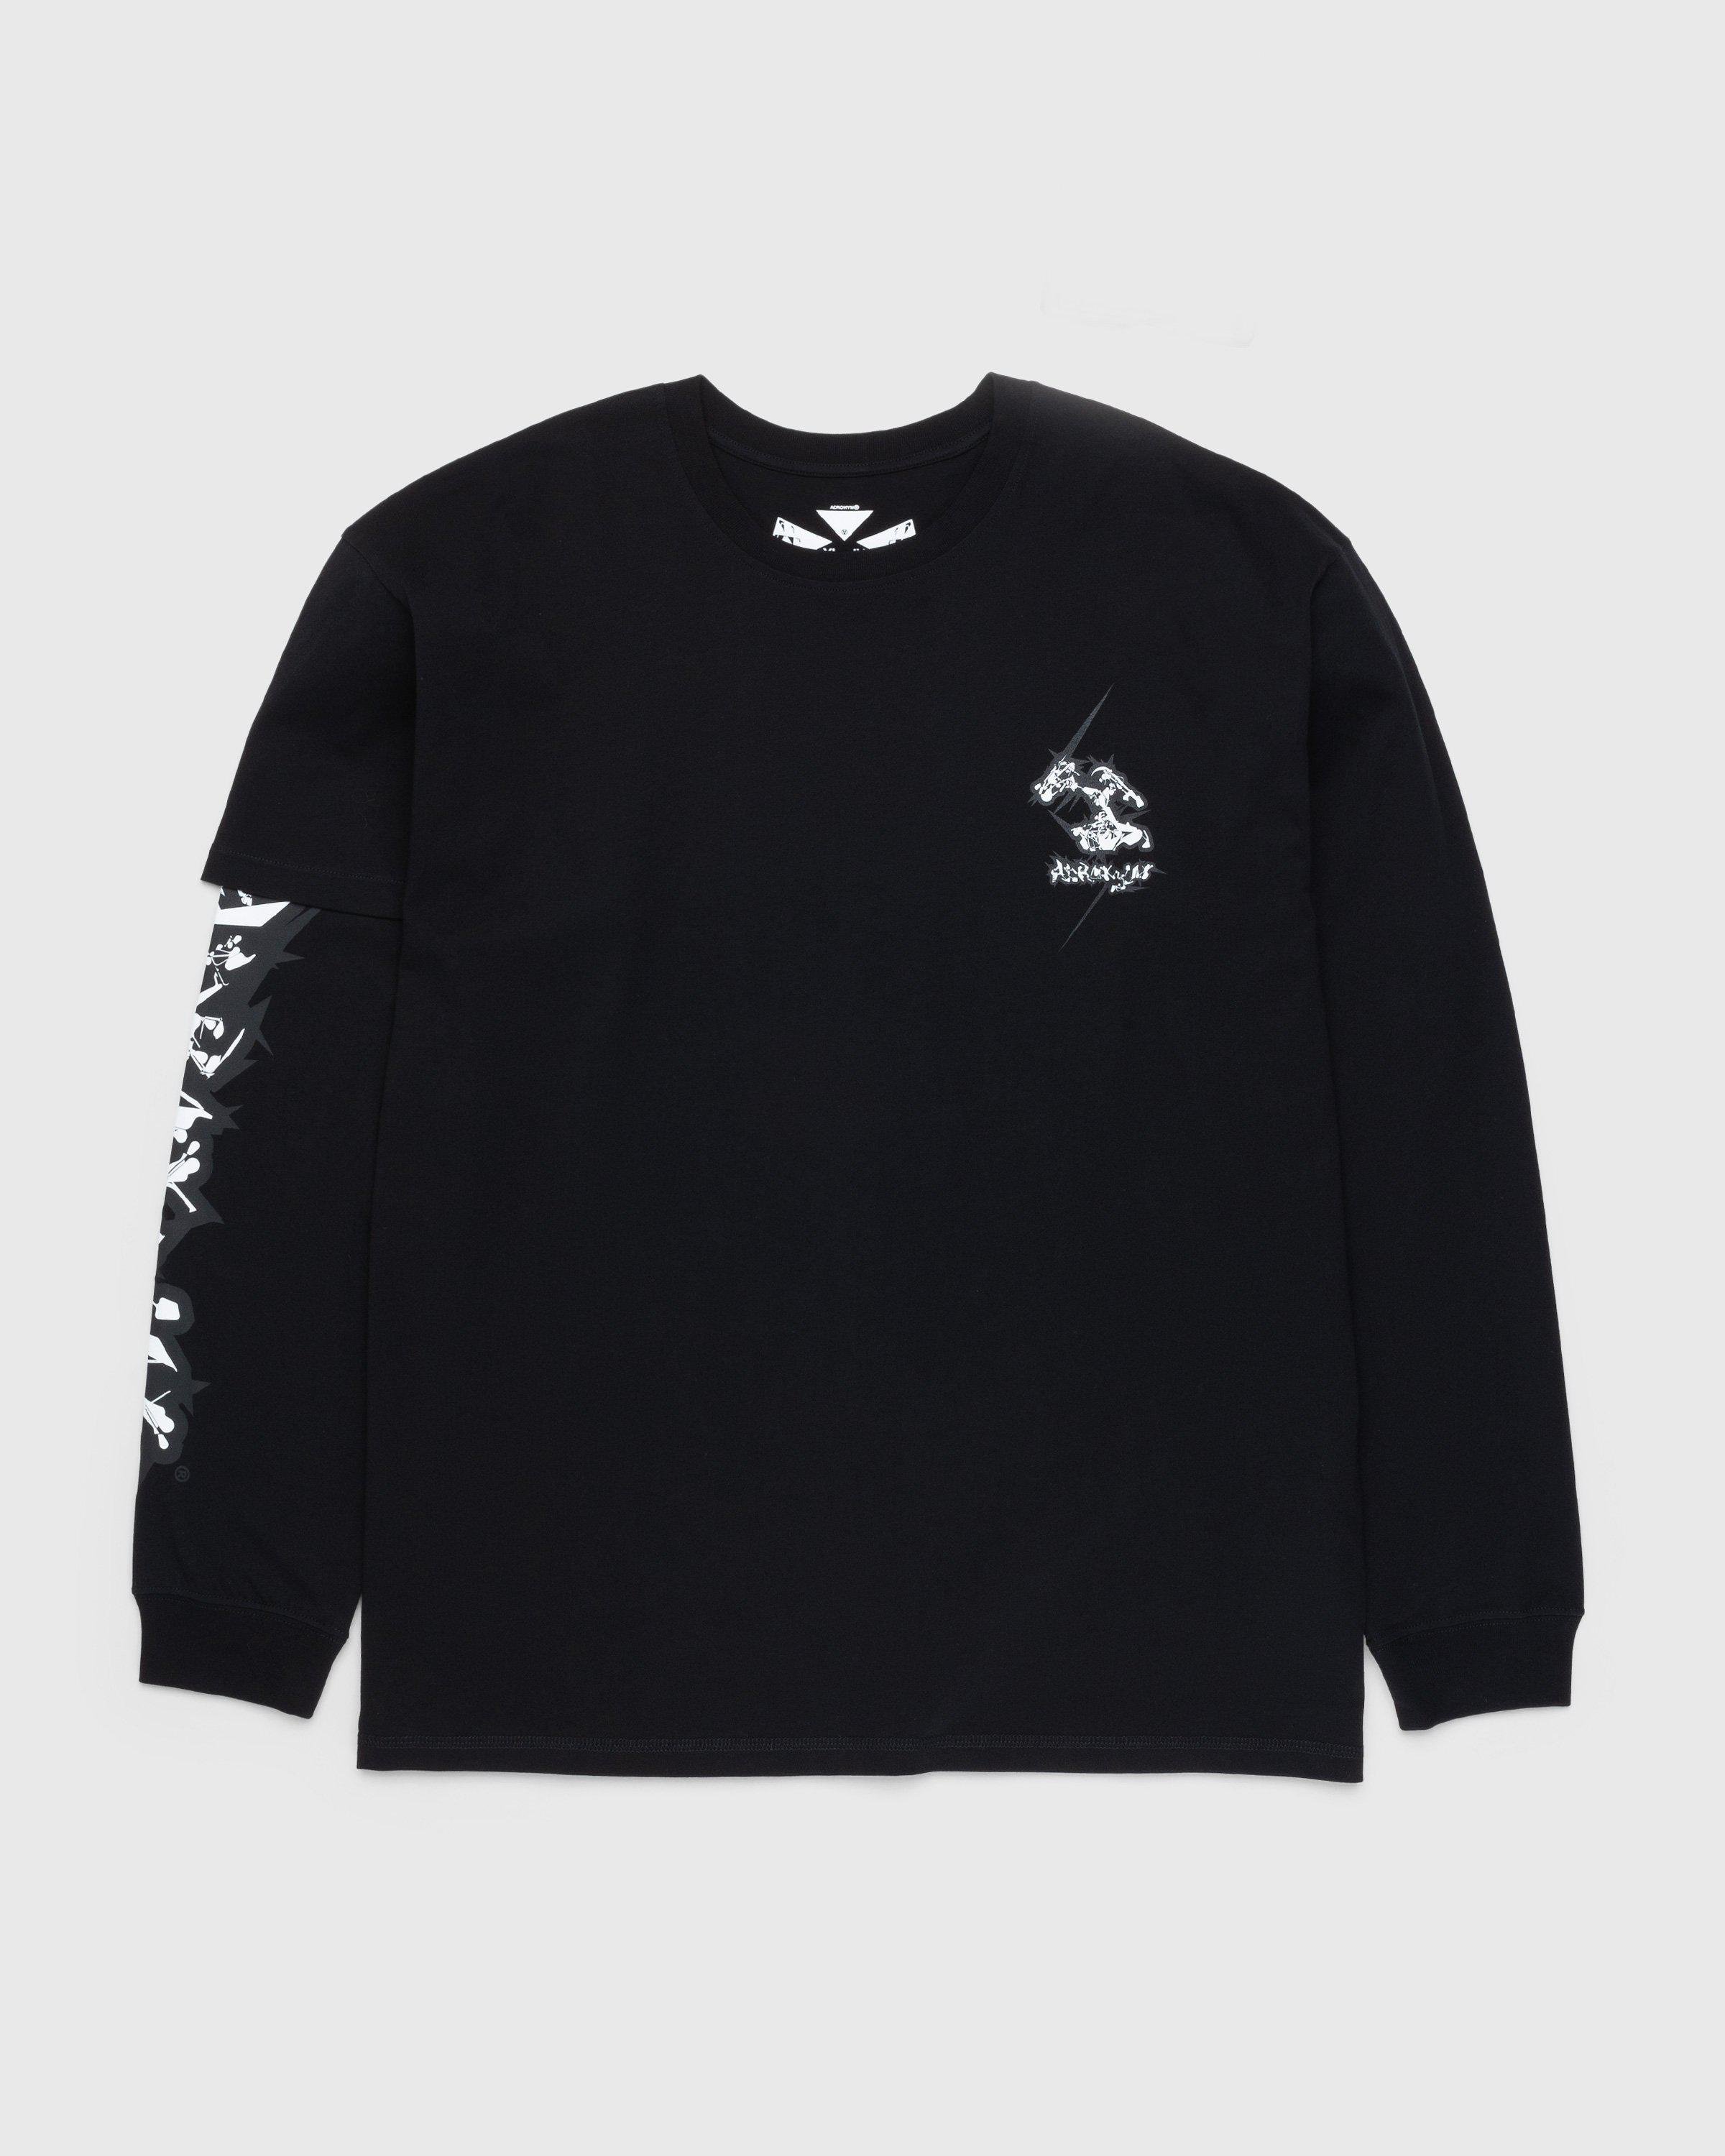 S29-PR-B Organic Cotton Longsleeve T-Shirt Black by ACRONYM